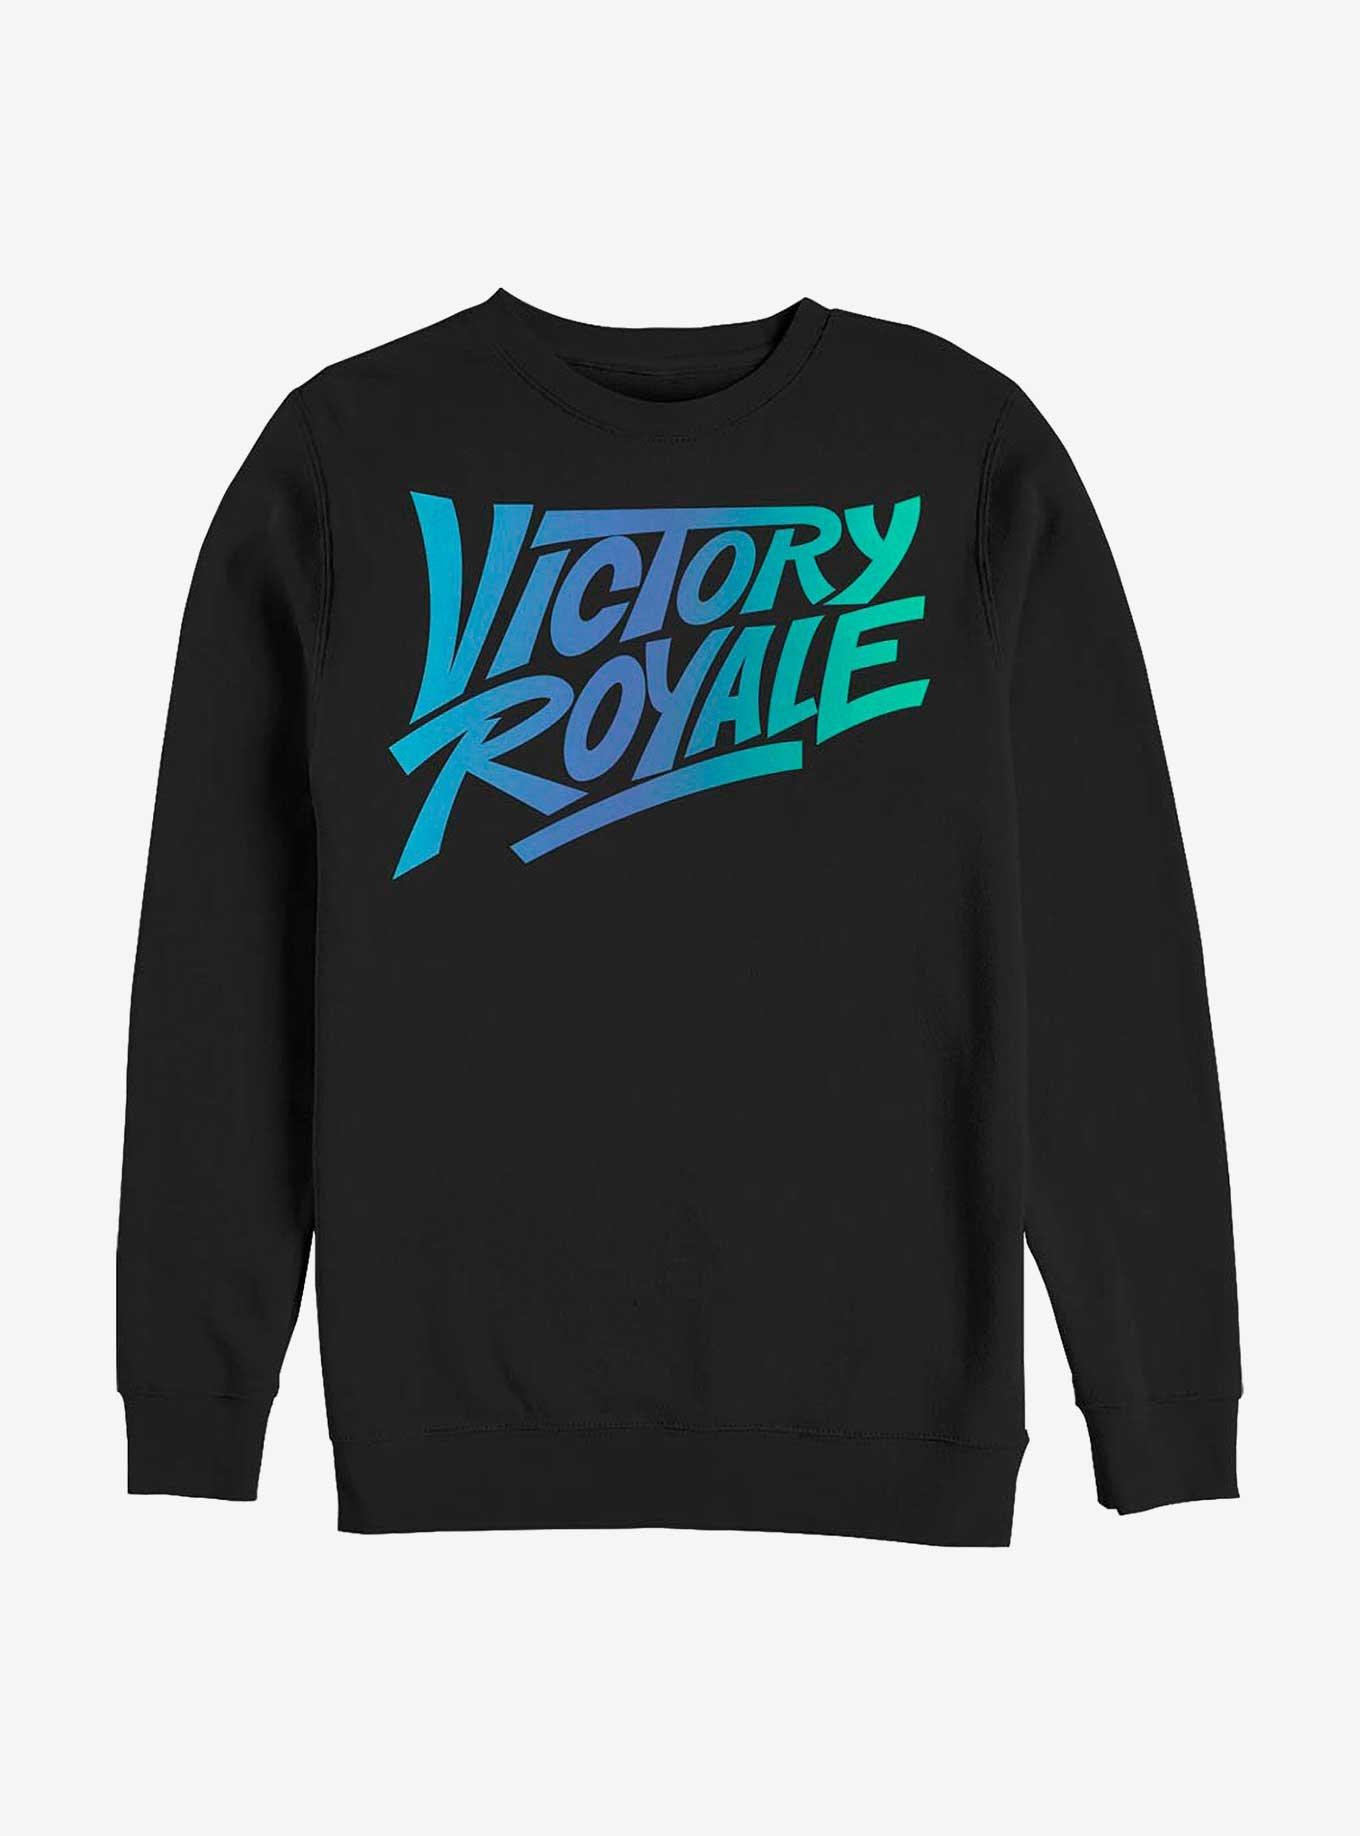 Fortnite Victory Royale Logo Sweatshirt